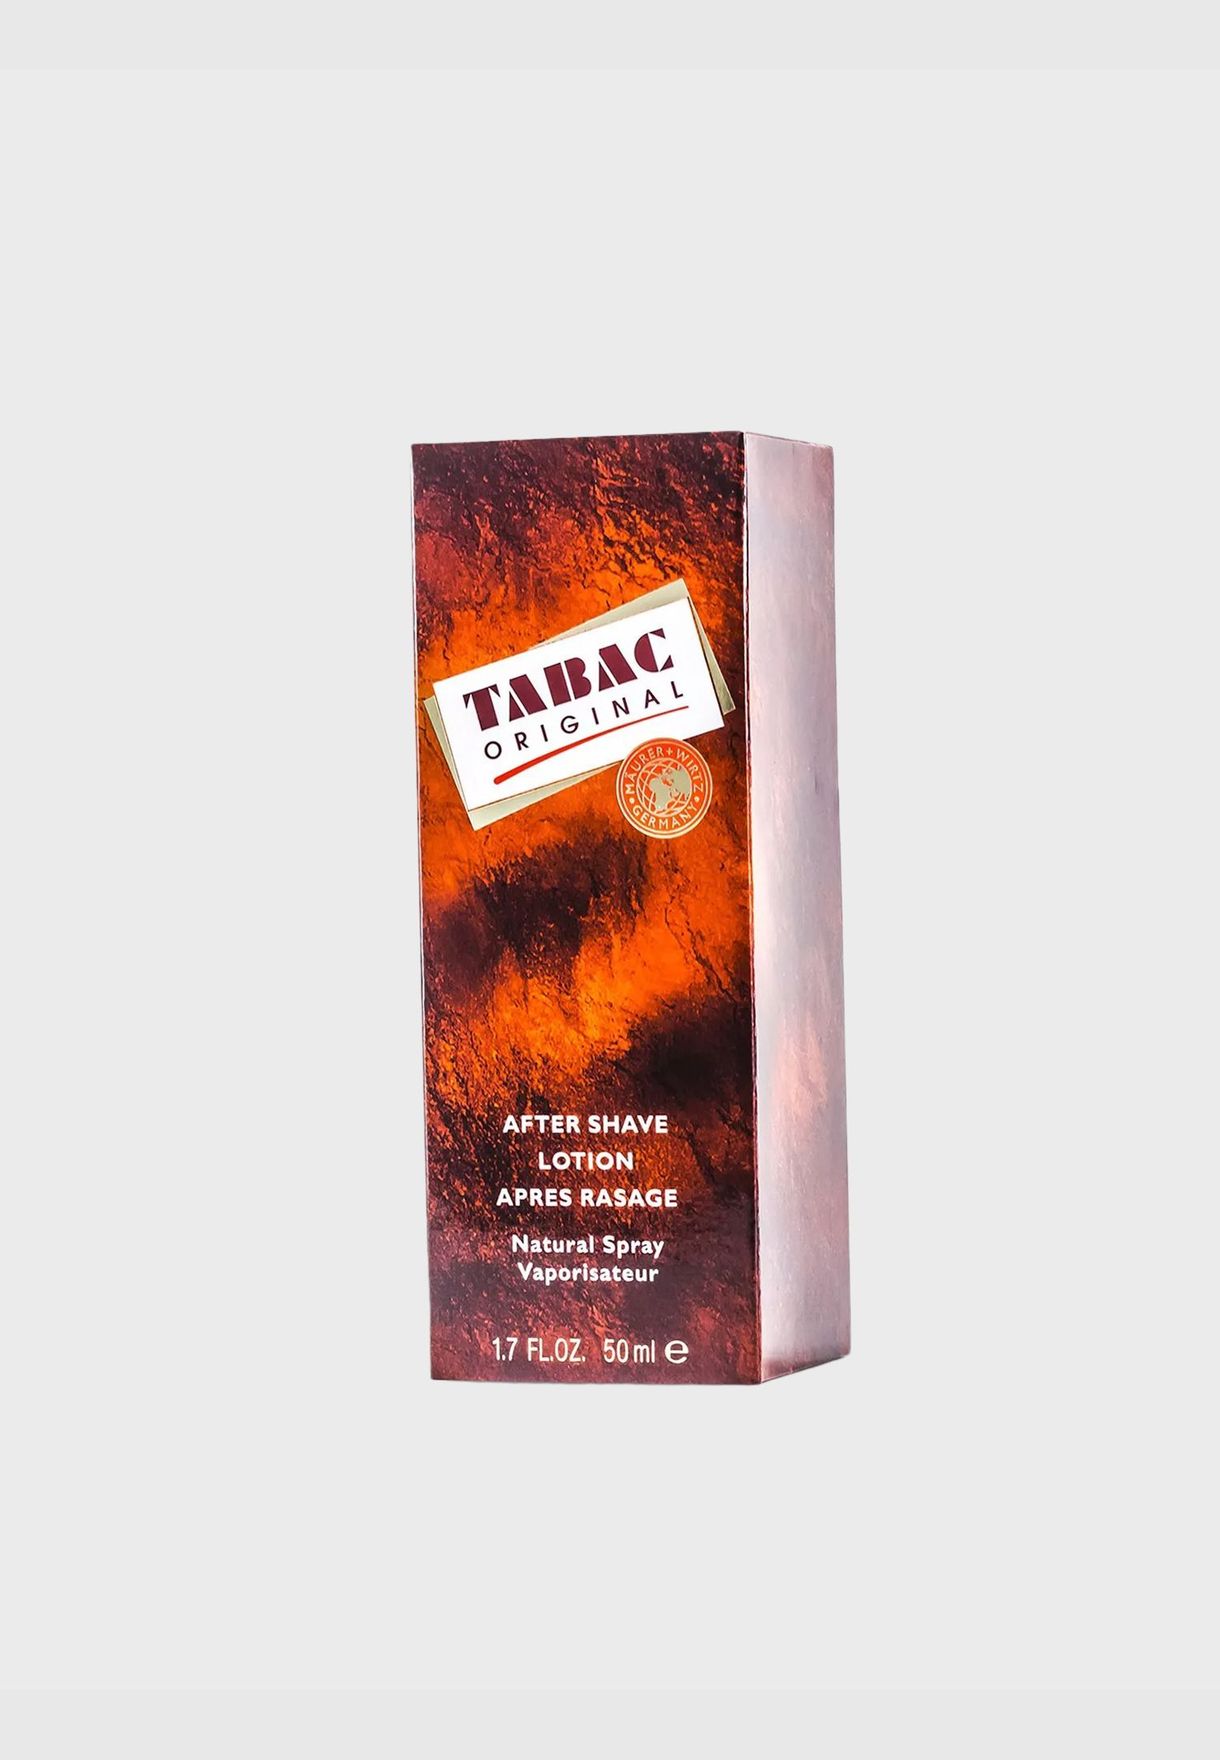 Tabac Original After Shave Spray